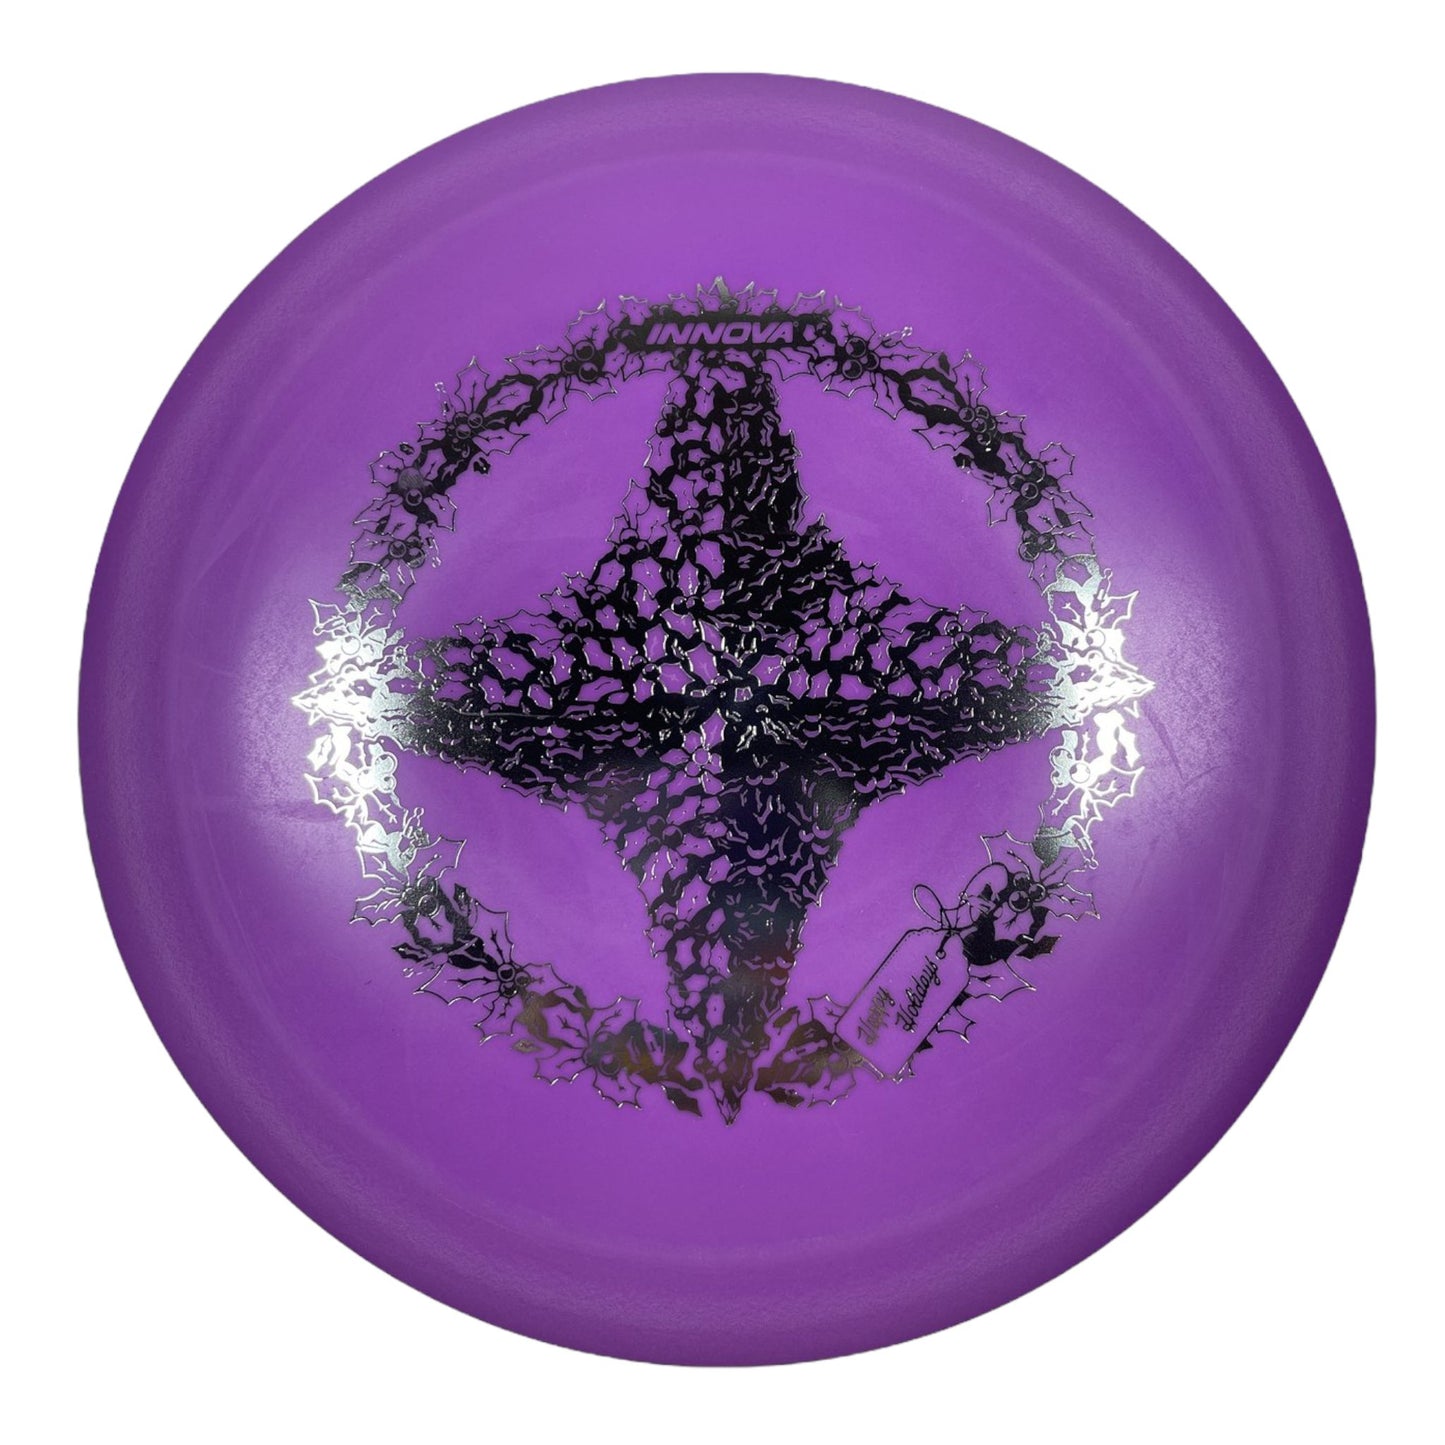 Innova Champion Discs Mamba | DX | Purple/Silver 170-171g Disc Golf